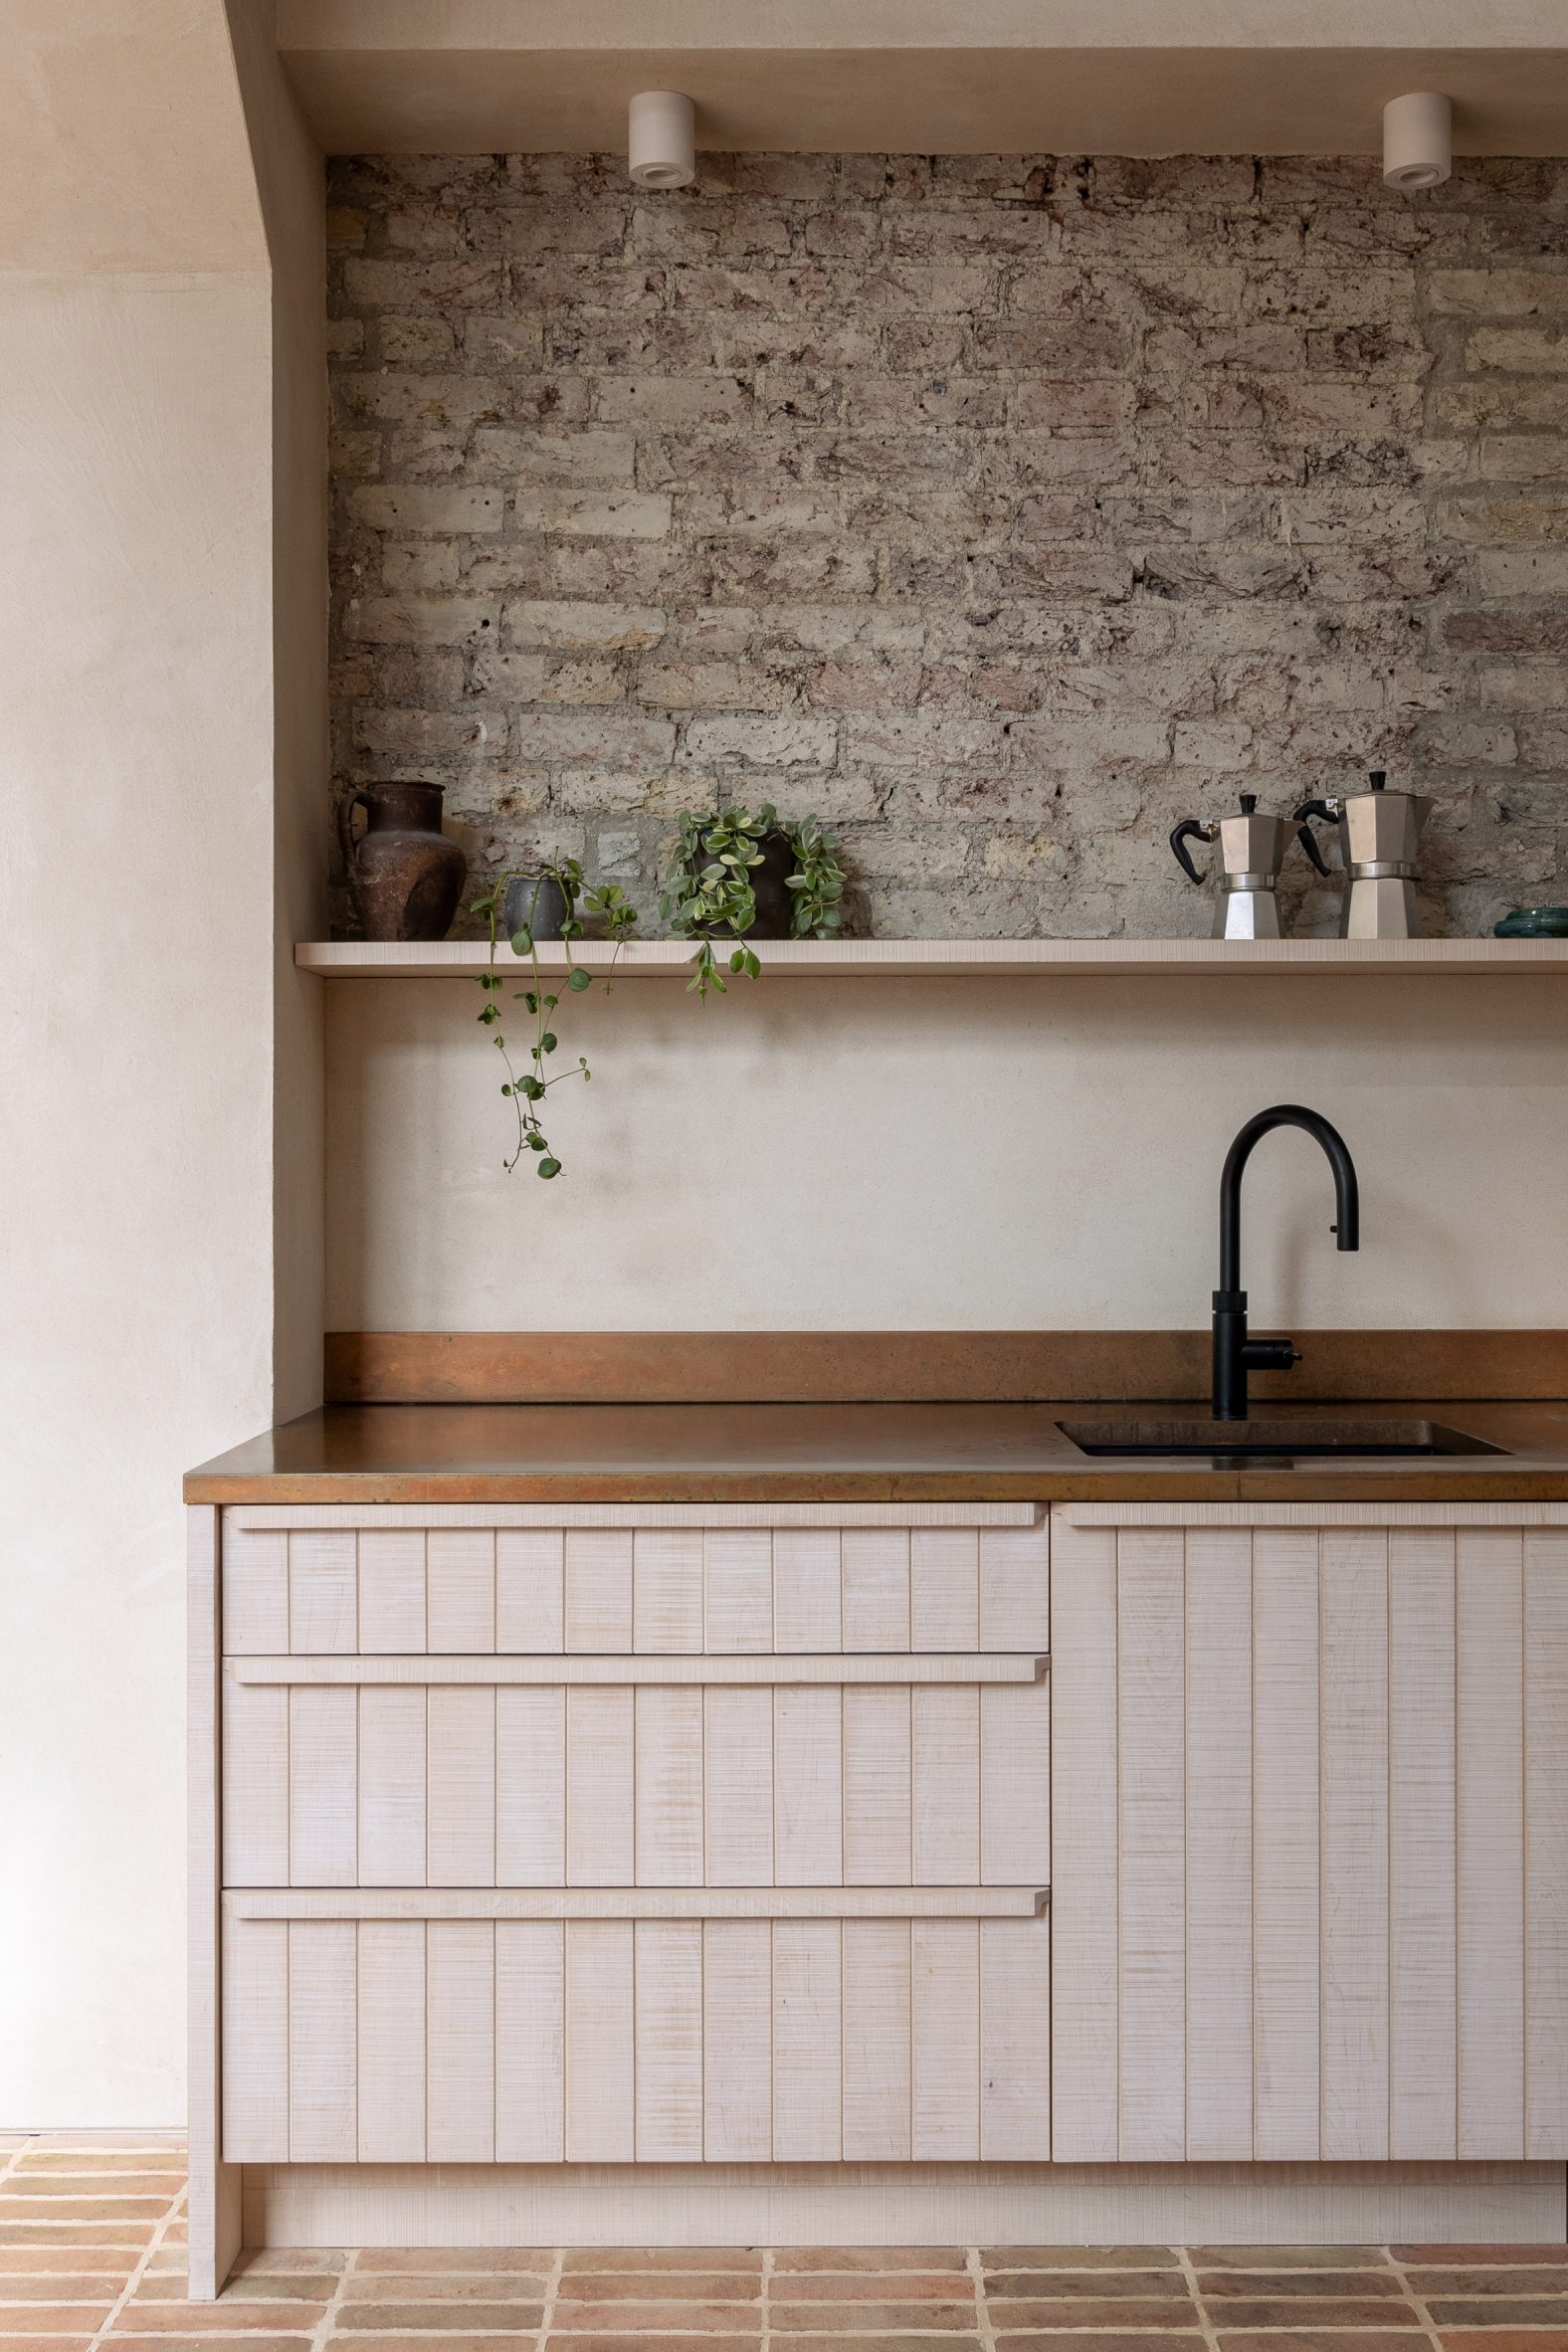 Wooden kitchen cabinetry set against brickwork wall